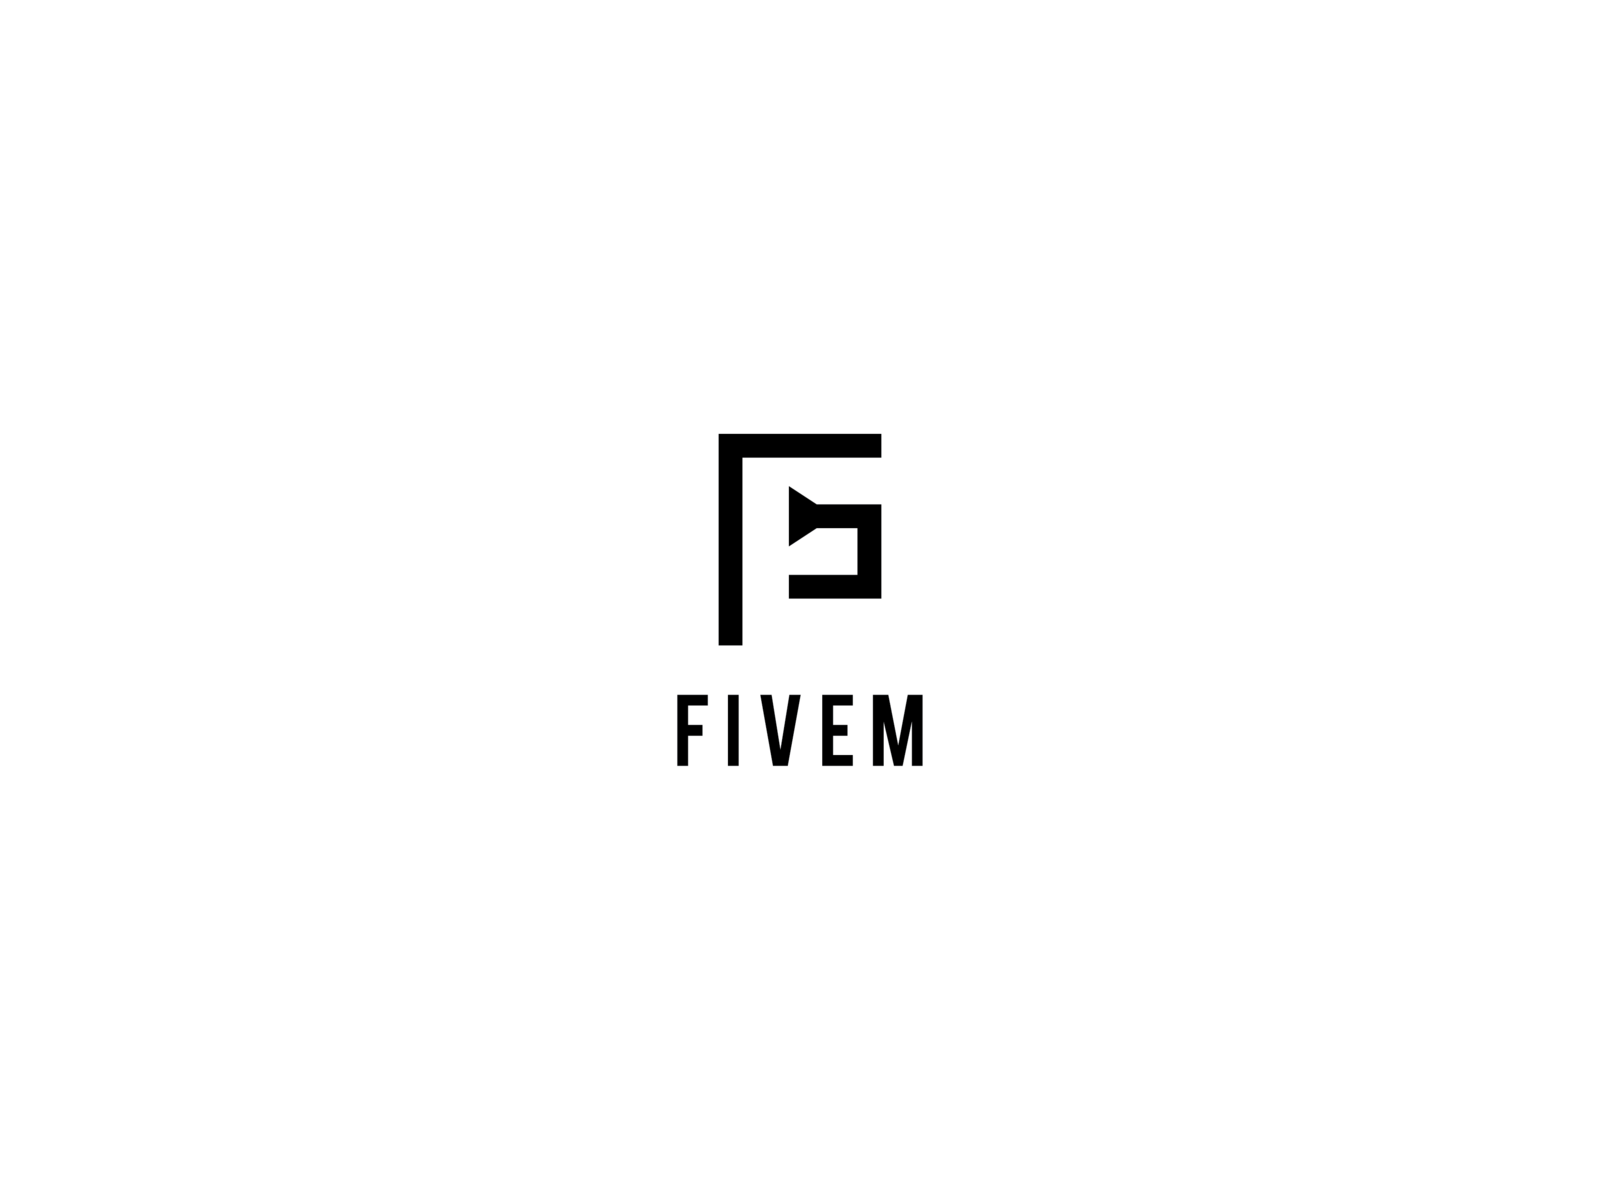 "Fivem" logo design by Huseyn Mehdizadeh on Dribbble